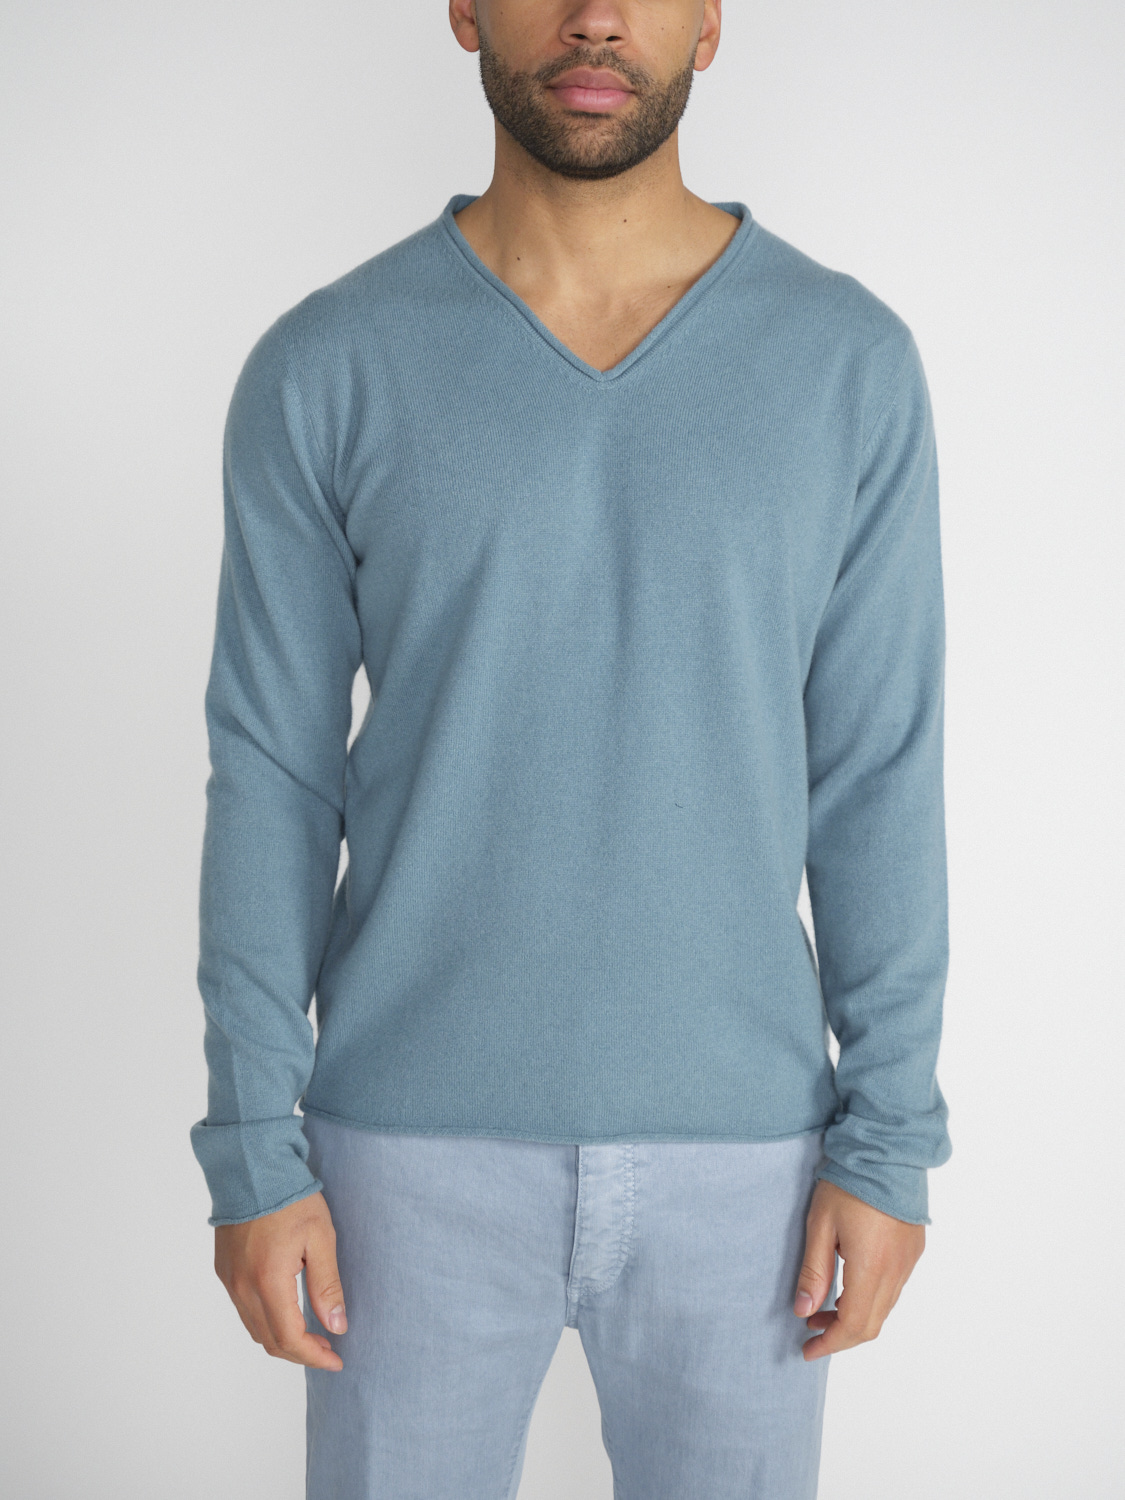 friendly hunting Maintain – Cashmere-Sweatshirt   mint M